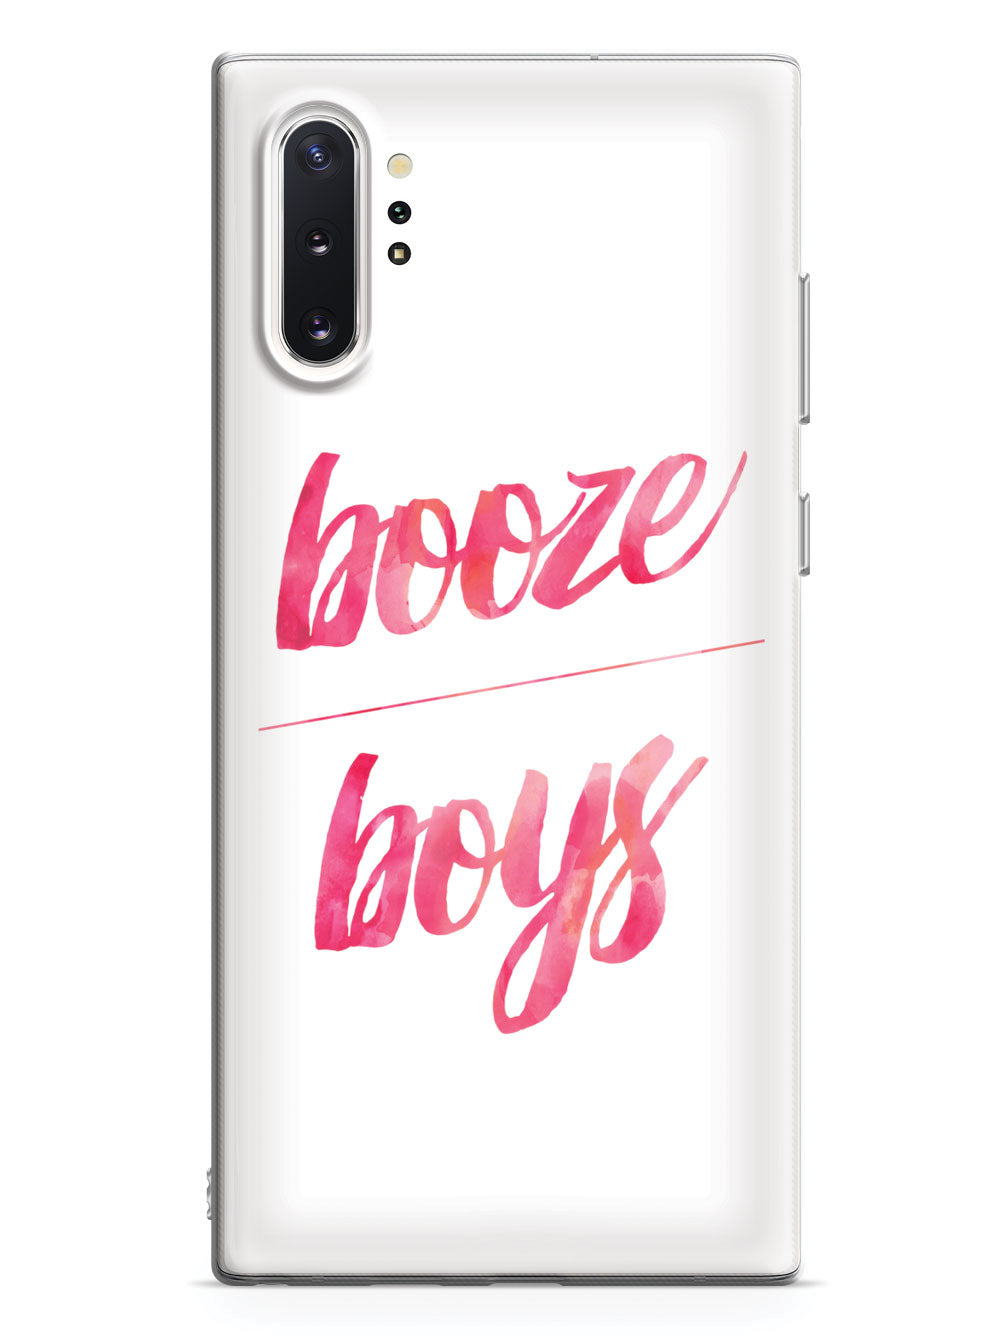 Booze Over Boys - Drinking Case